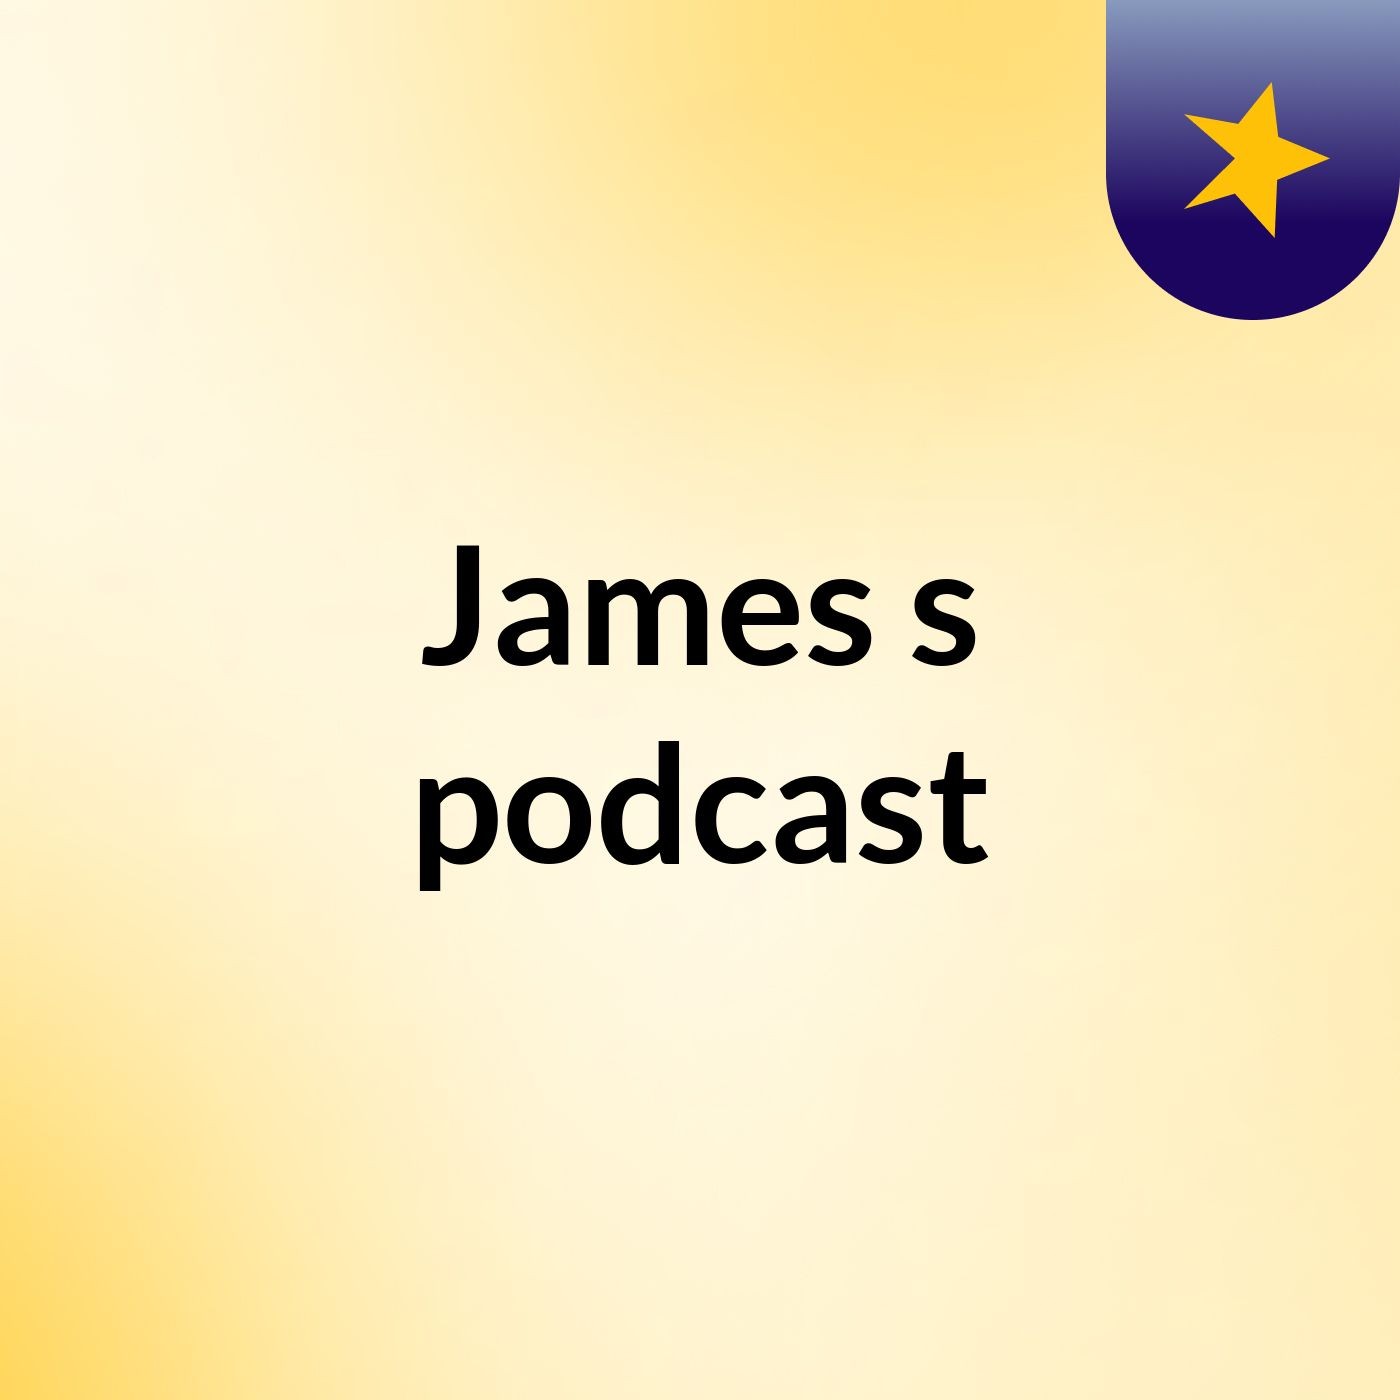 Episode 8 - James's podcast